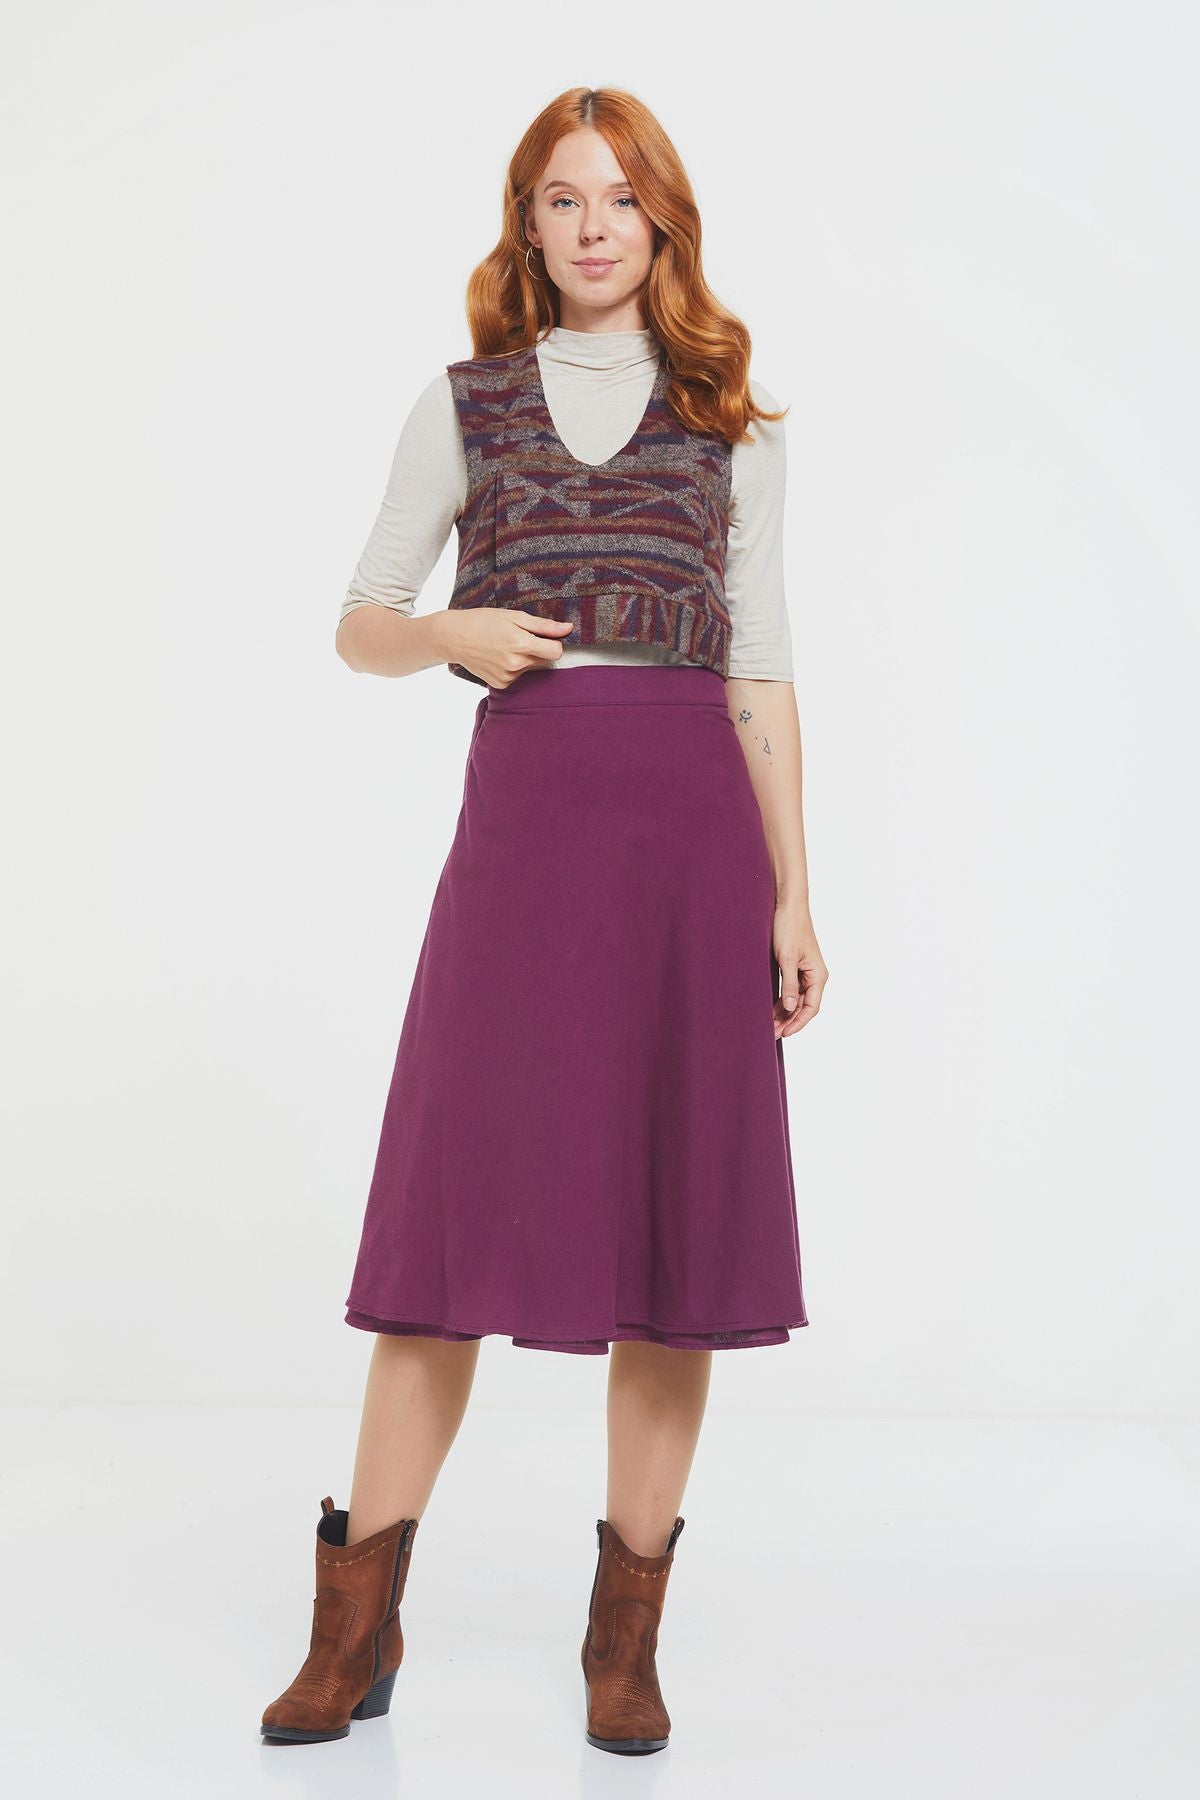 Ethnic Patterned Short Women's Vest Purple